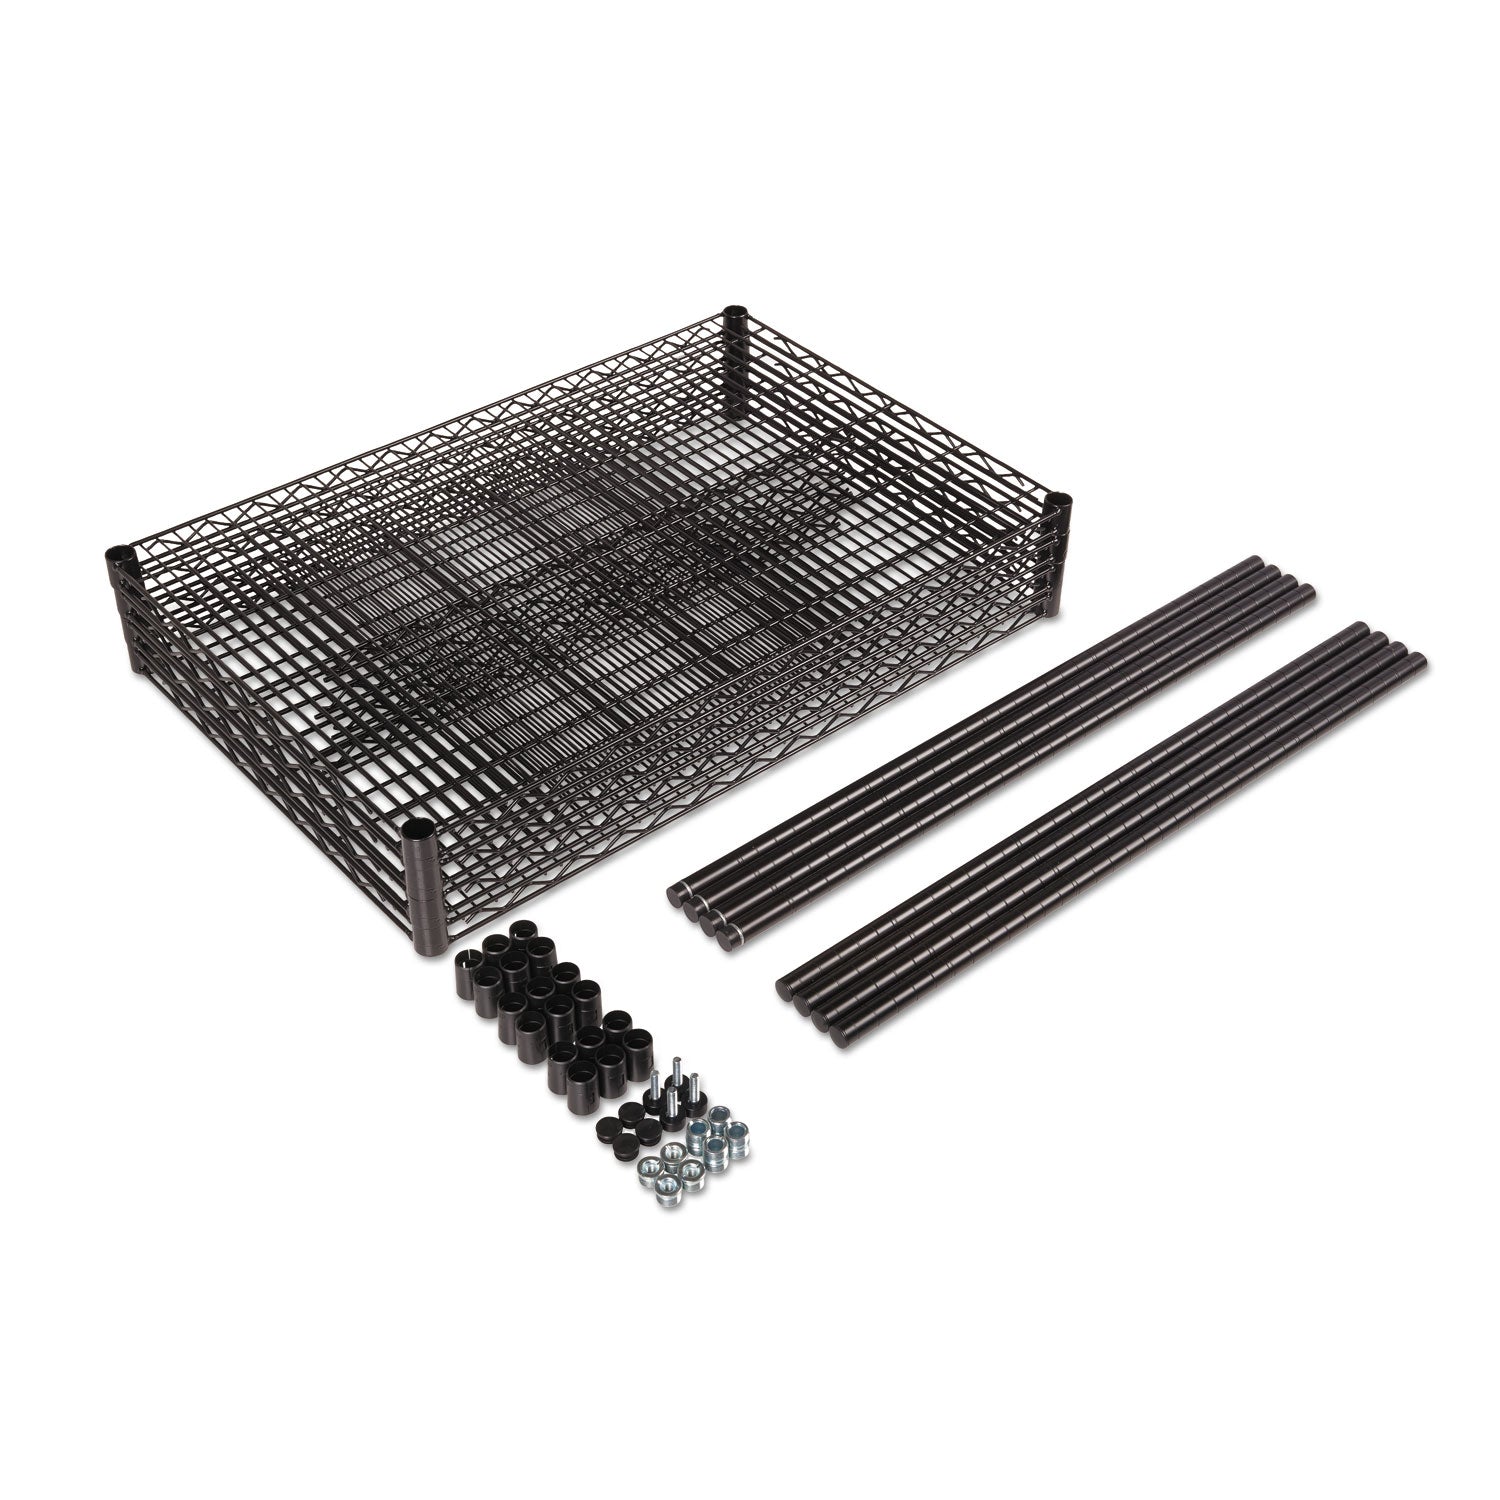 NSF Certified Industrial Four-Shelf Wire Shelving Kit, 48w x 24d x 72h, Black - 